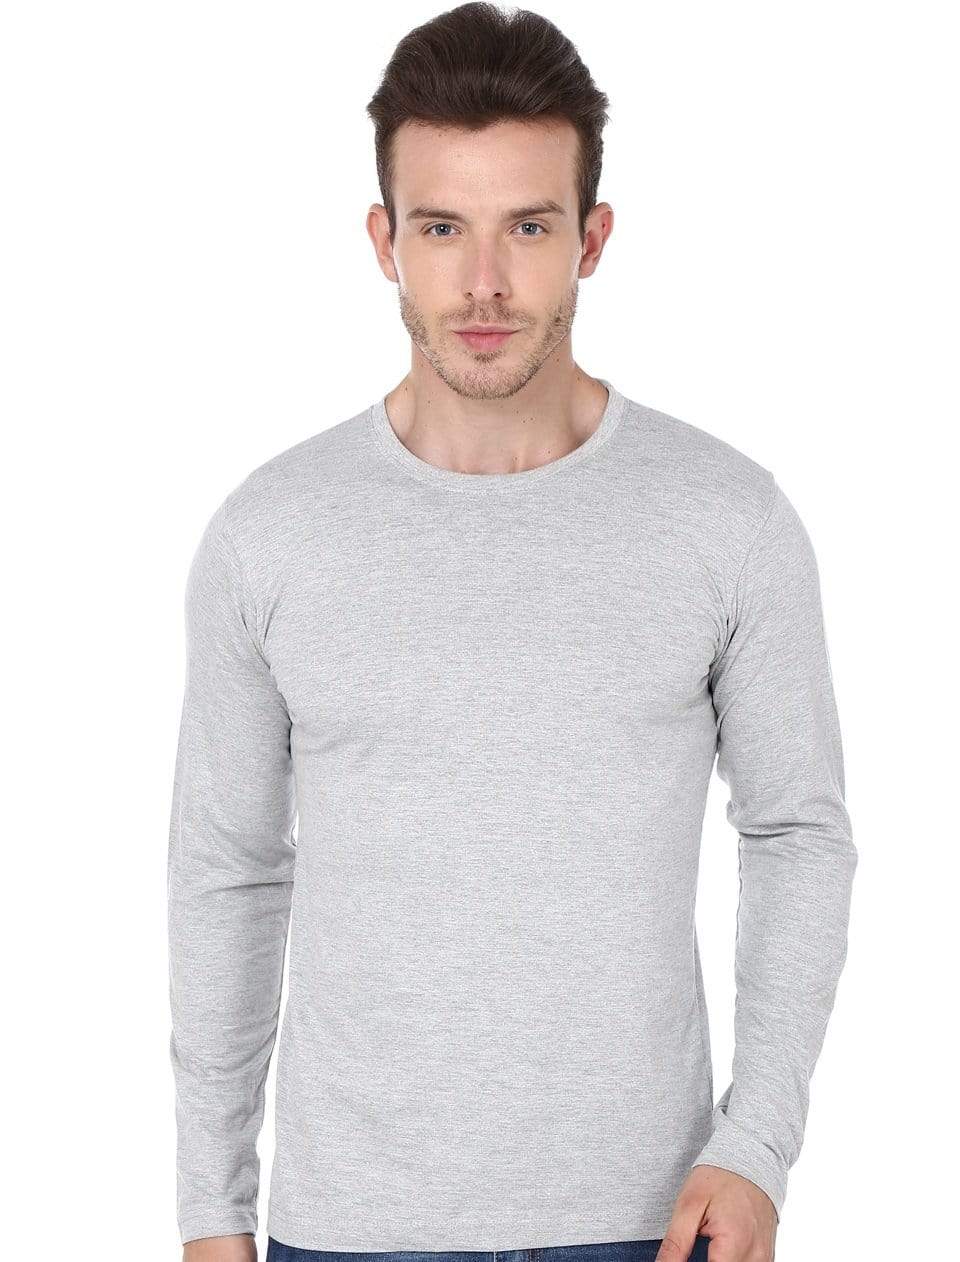 Men's round neck grey full sleeves t-shirt